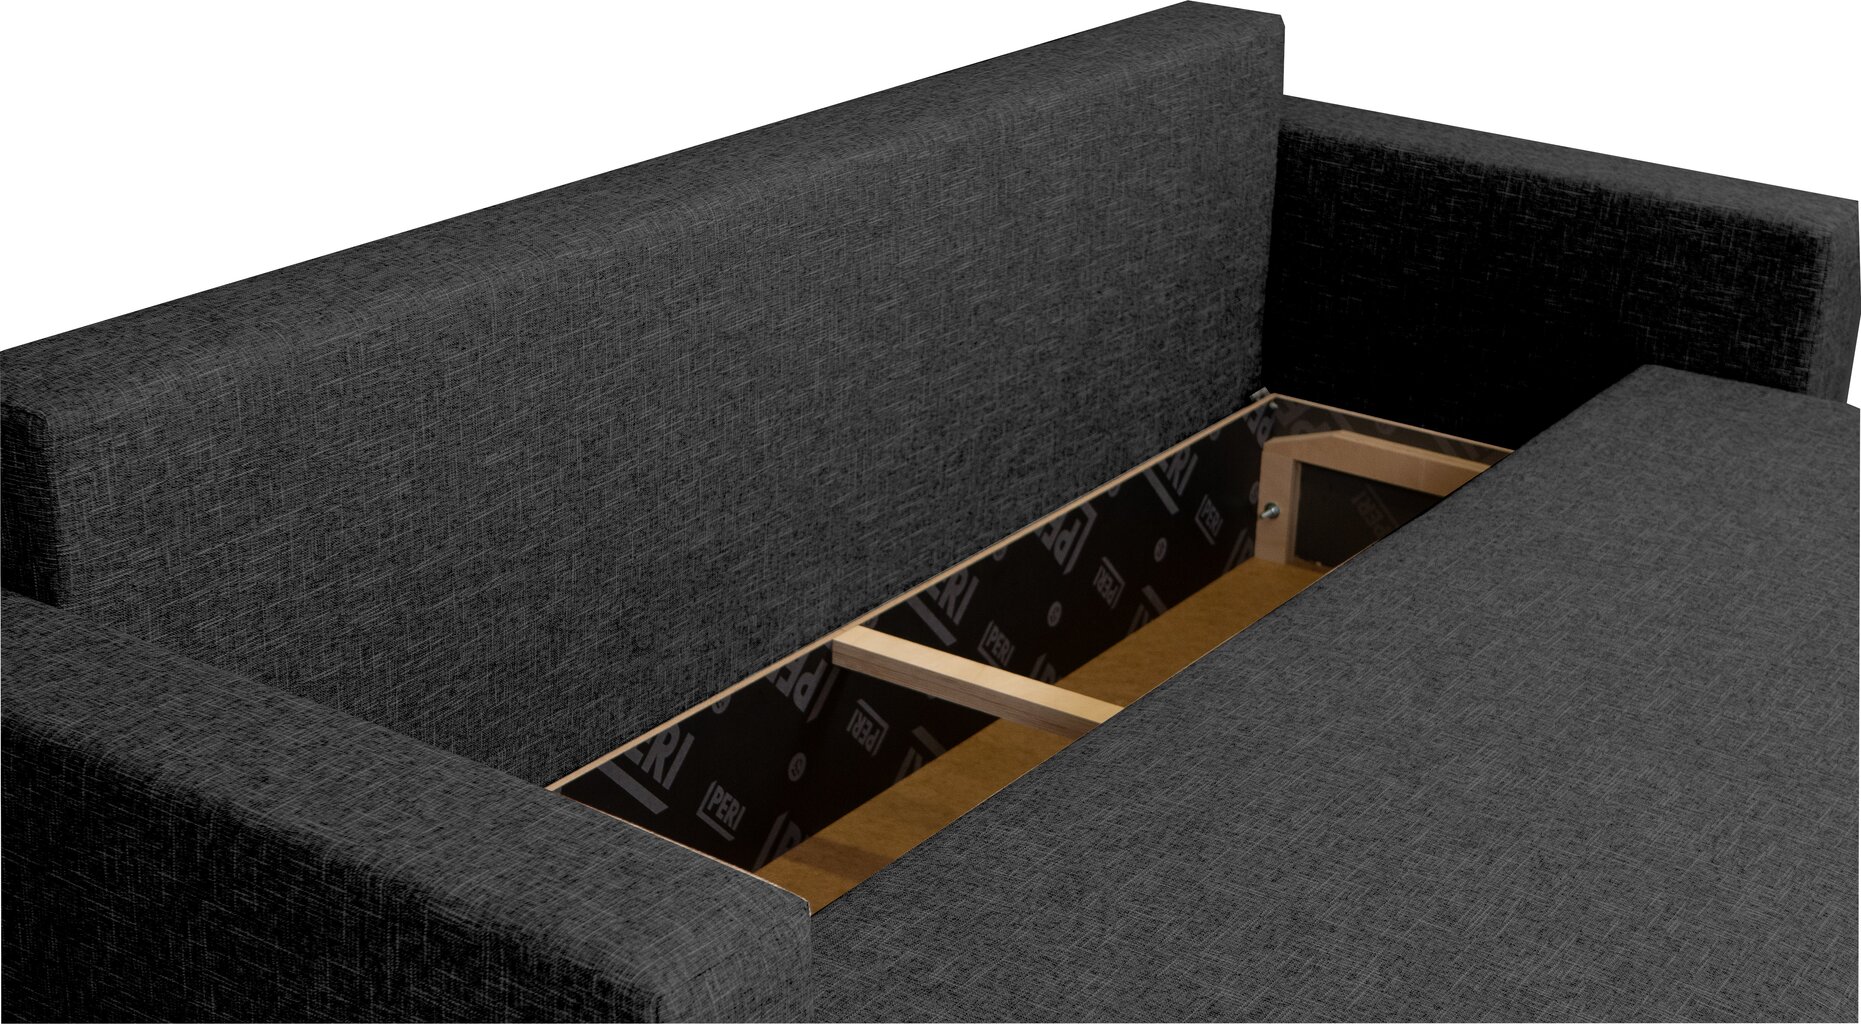 Sofa - lova Vuran XL Tamsiai pilka kaina ir informacija | Sofos | pigu.lt